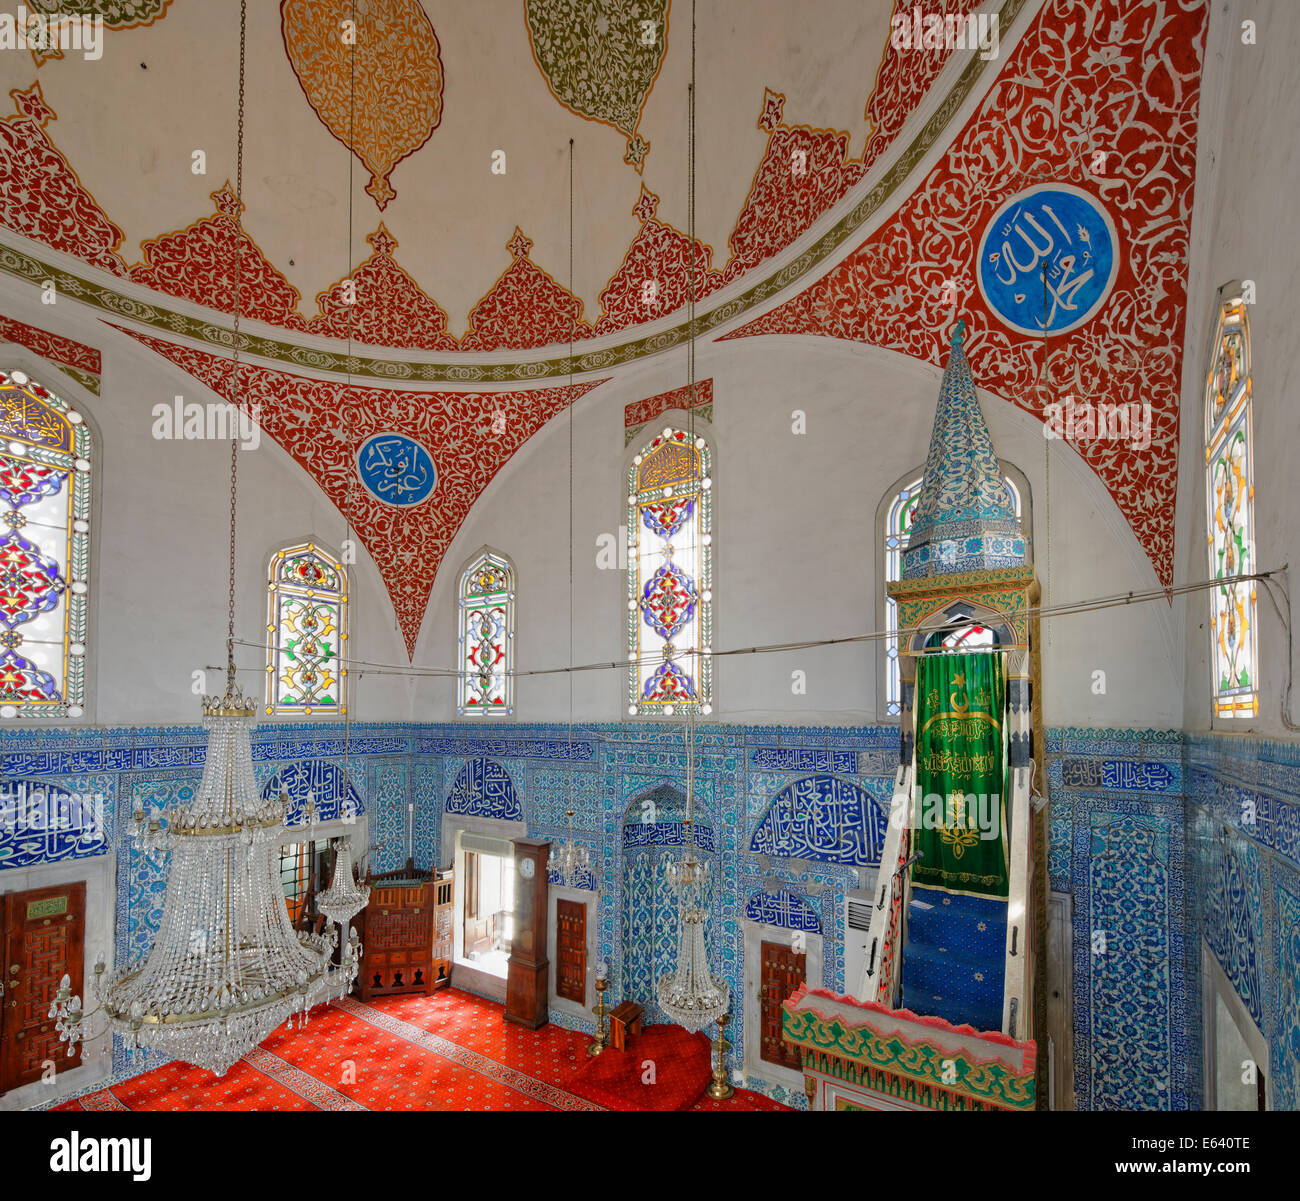 Çinili Camii, tiled mosque, with faience pottery from Iznik, Üsküdar, Istanbul, Asian side, Turkey Stock Photo